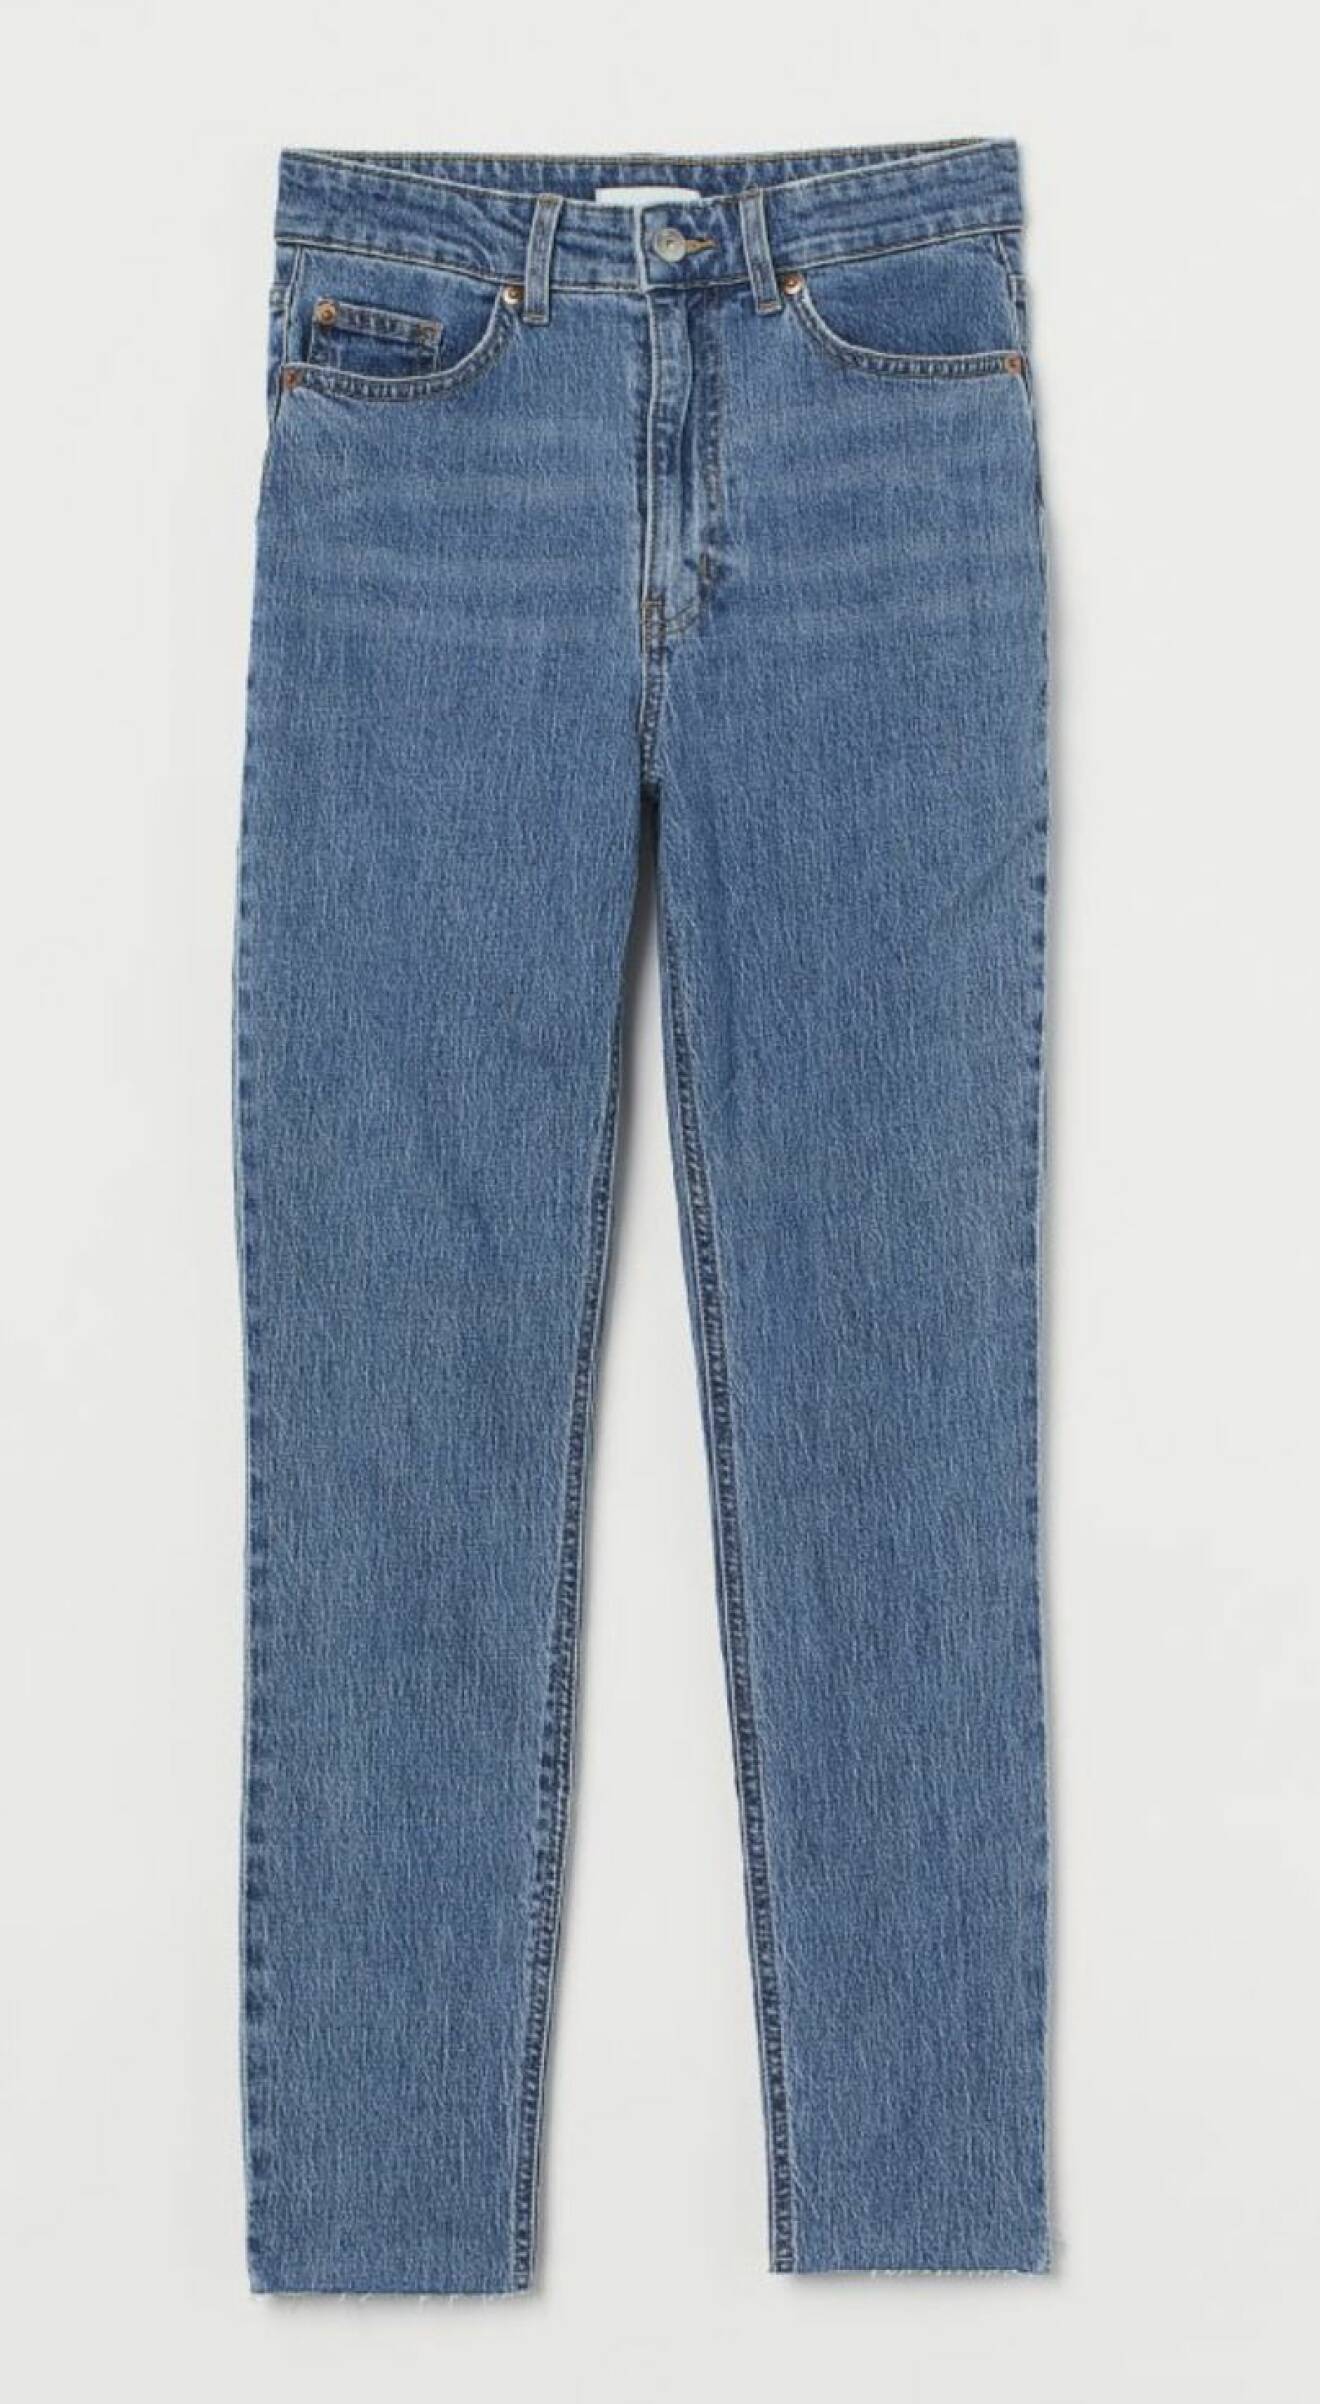 jeans från H&amp;M